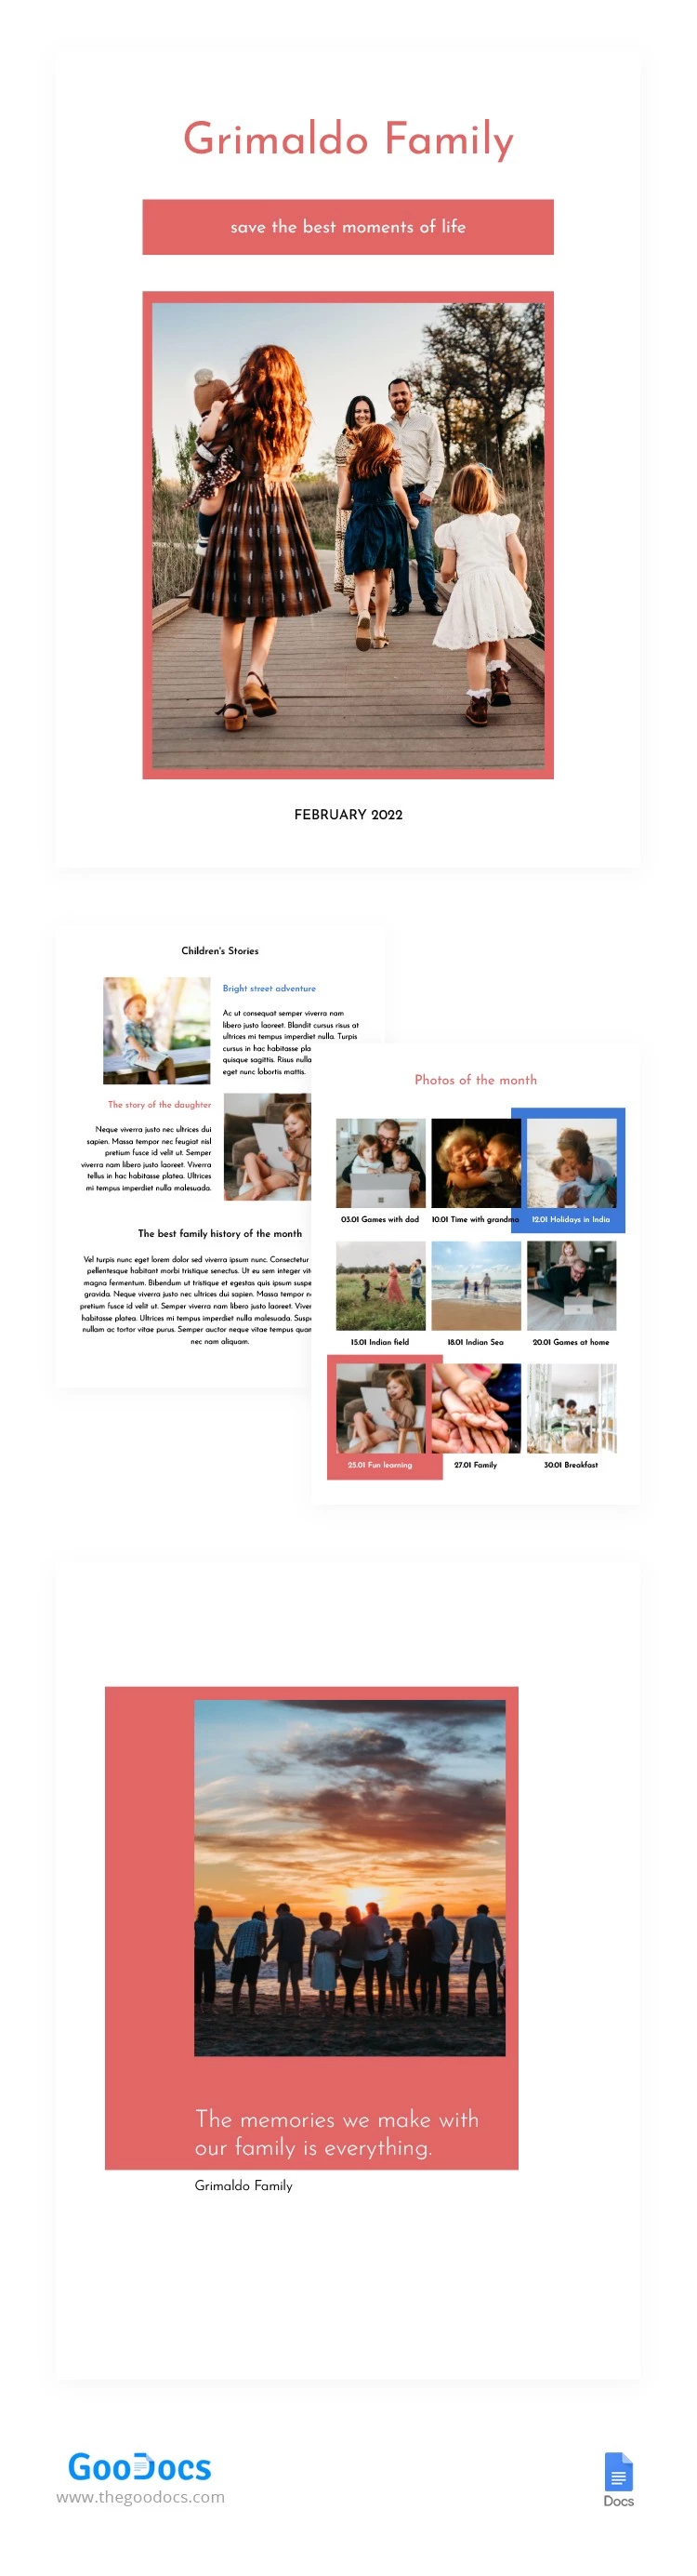 Familienfotoalbum - free Google Docs Template - 10063489